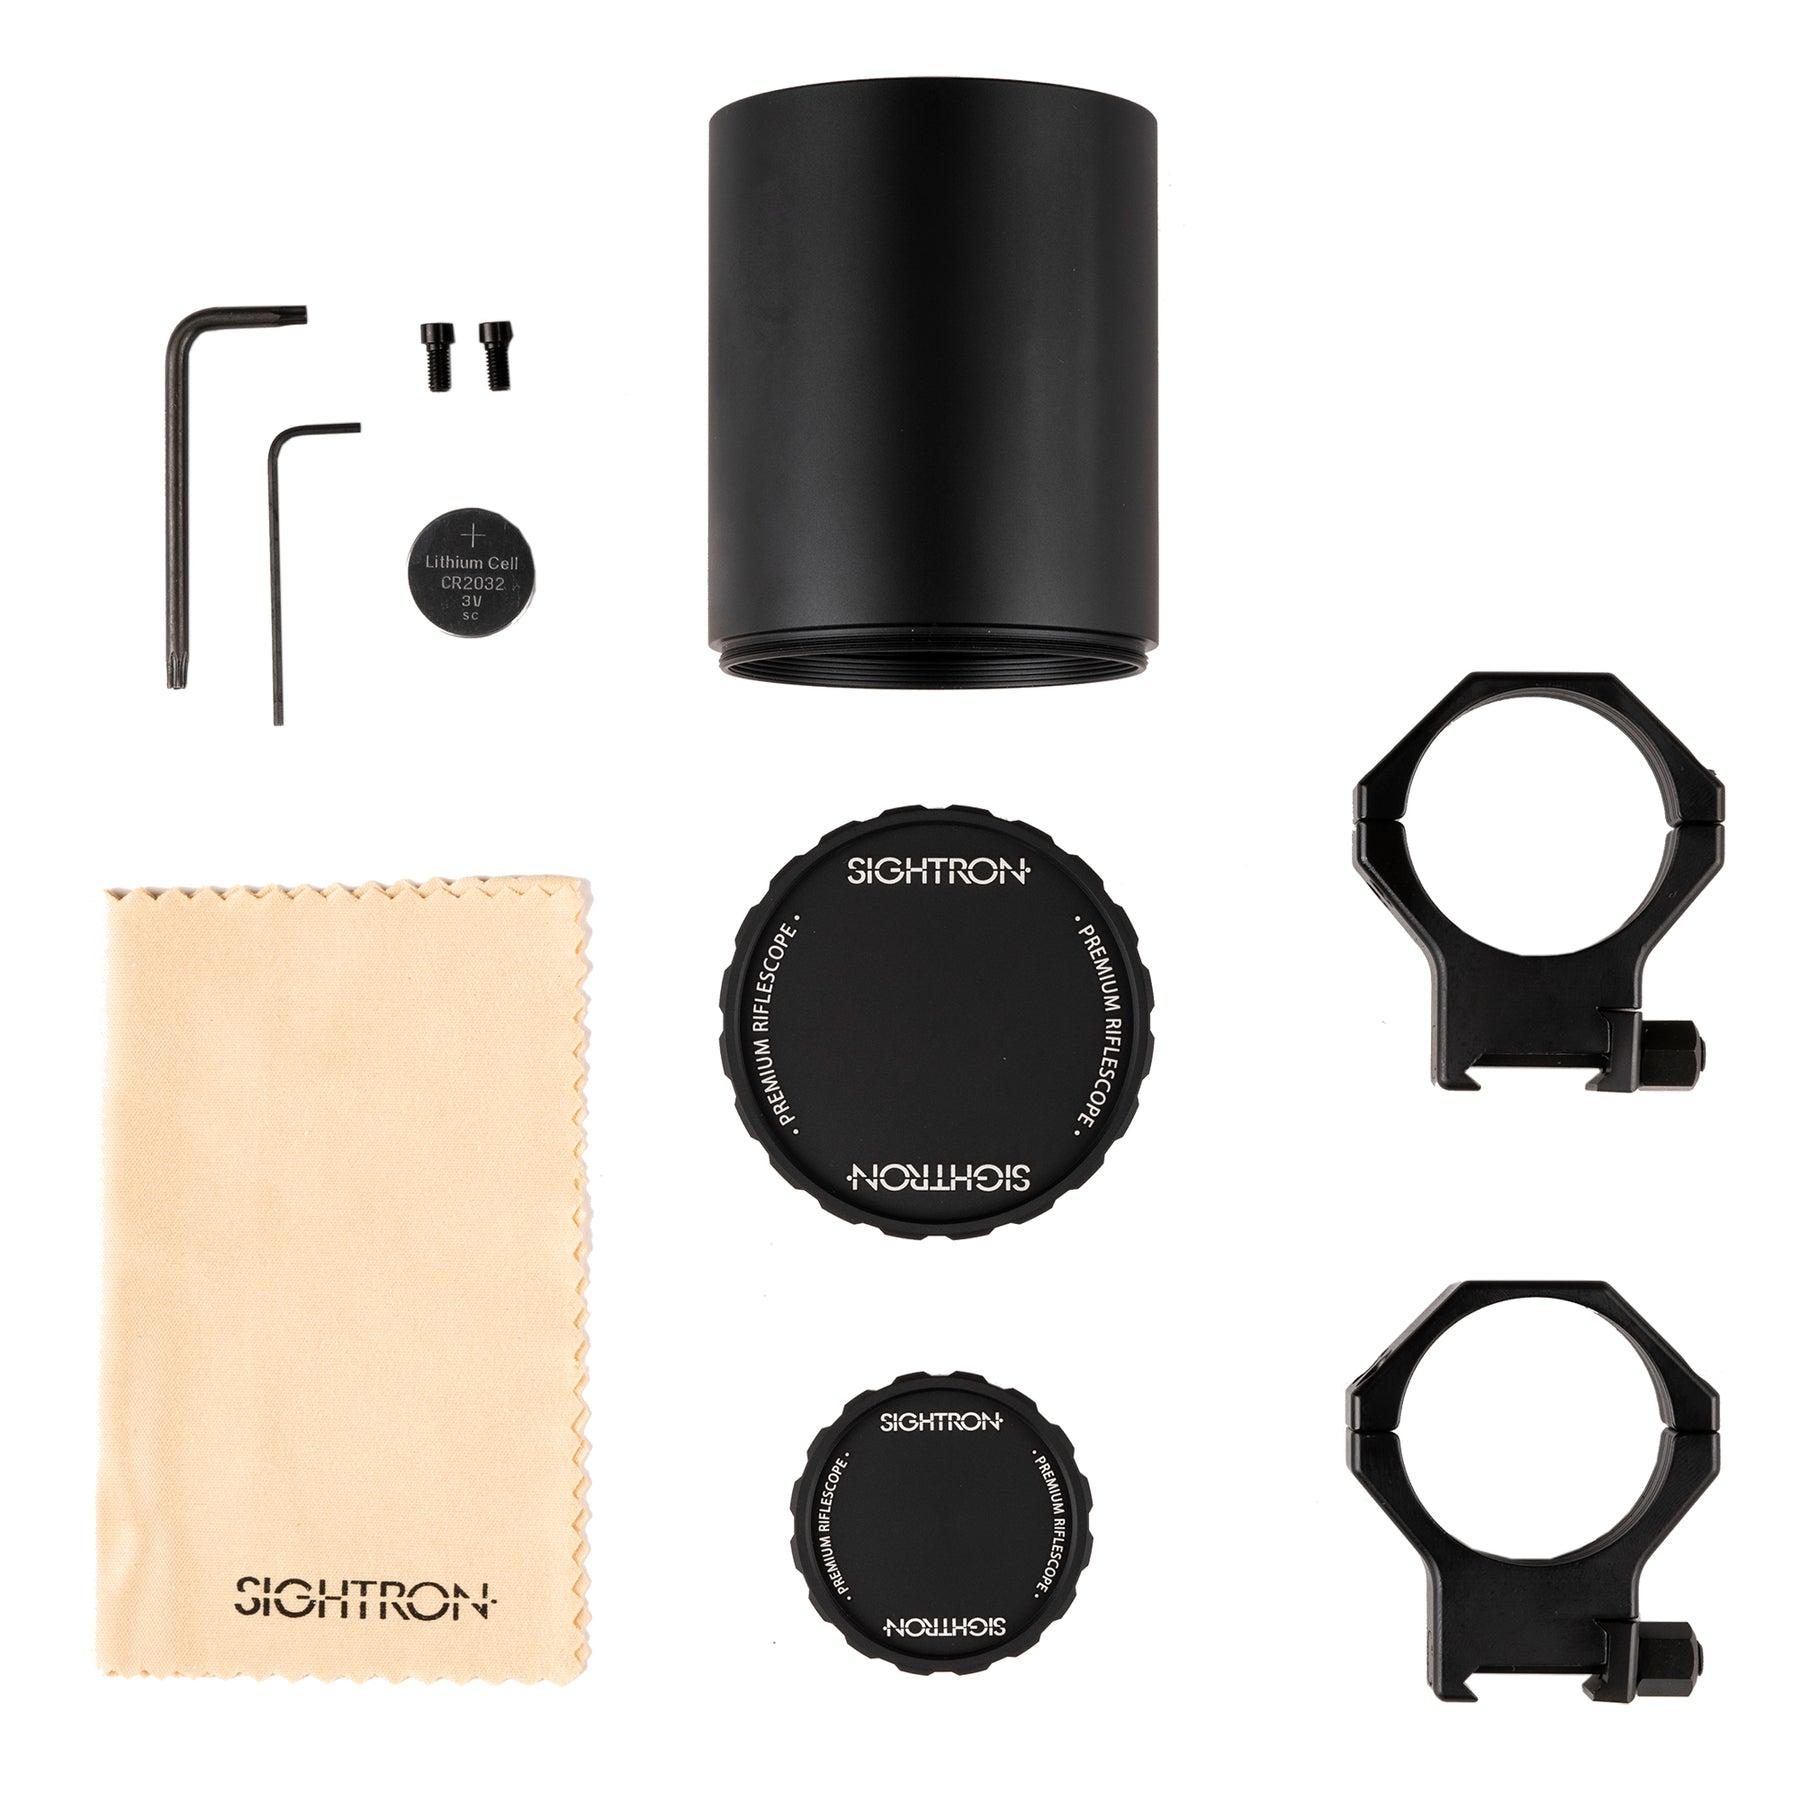 Sightron sviii 5 40x56riflescope accessories in box 1800x1800